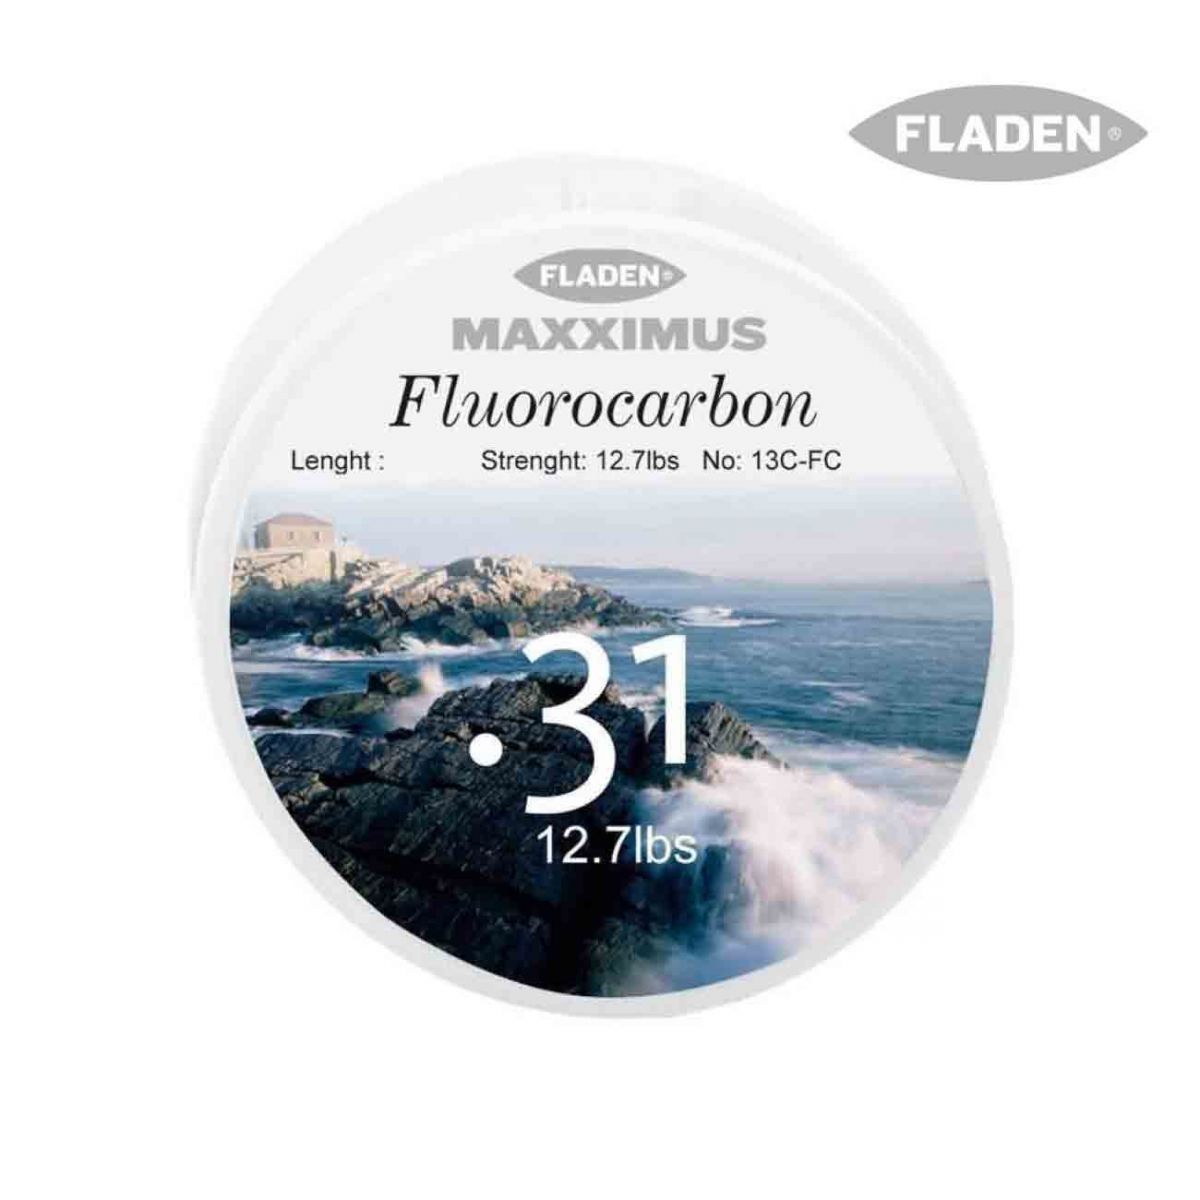 Fladen Maxximus Fluorocarbon Misina 50 Metre,fladen kalitesinde %100 flourocarbon seri 50 metre olarak piyasaya sunulan misina serisi